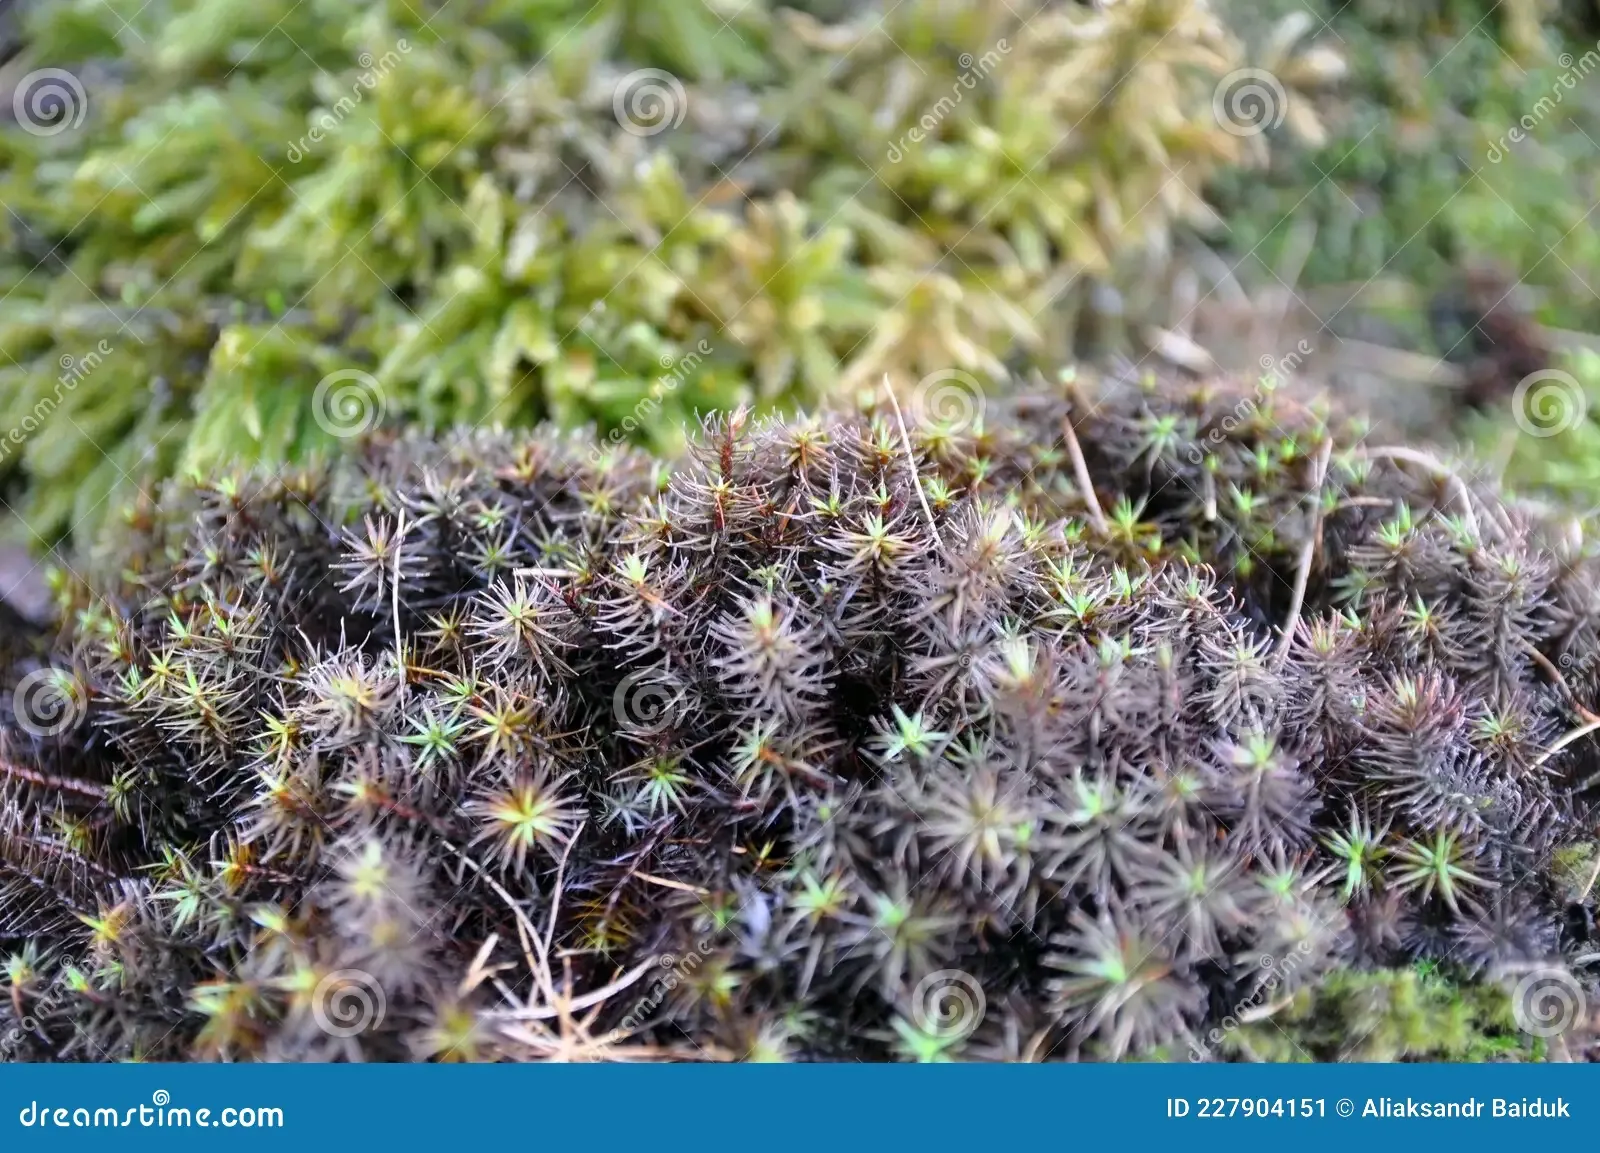 cap-moss-polytrichum-piliferum-early-spring-wildlife-variety-227904151.jpg